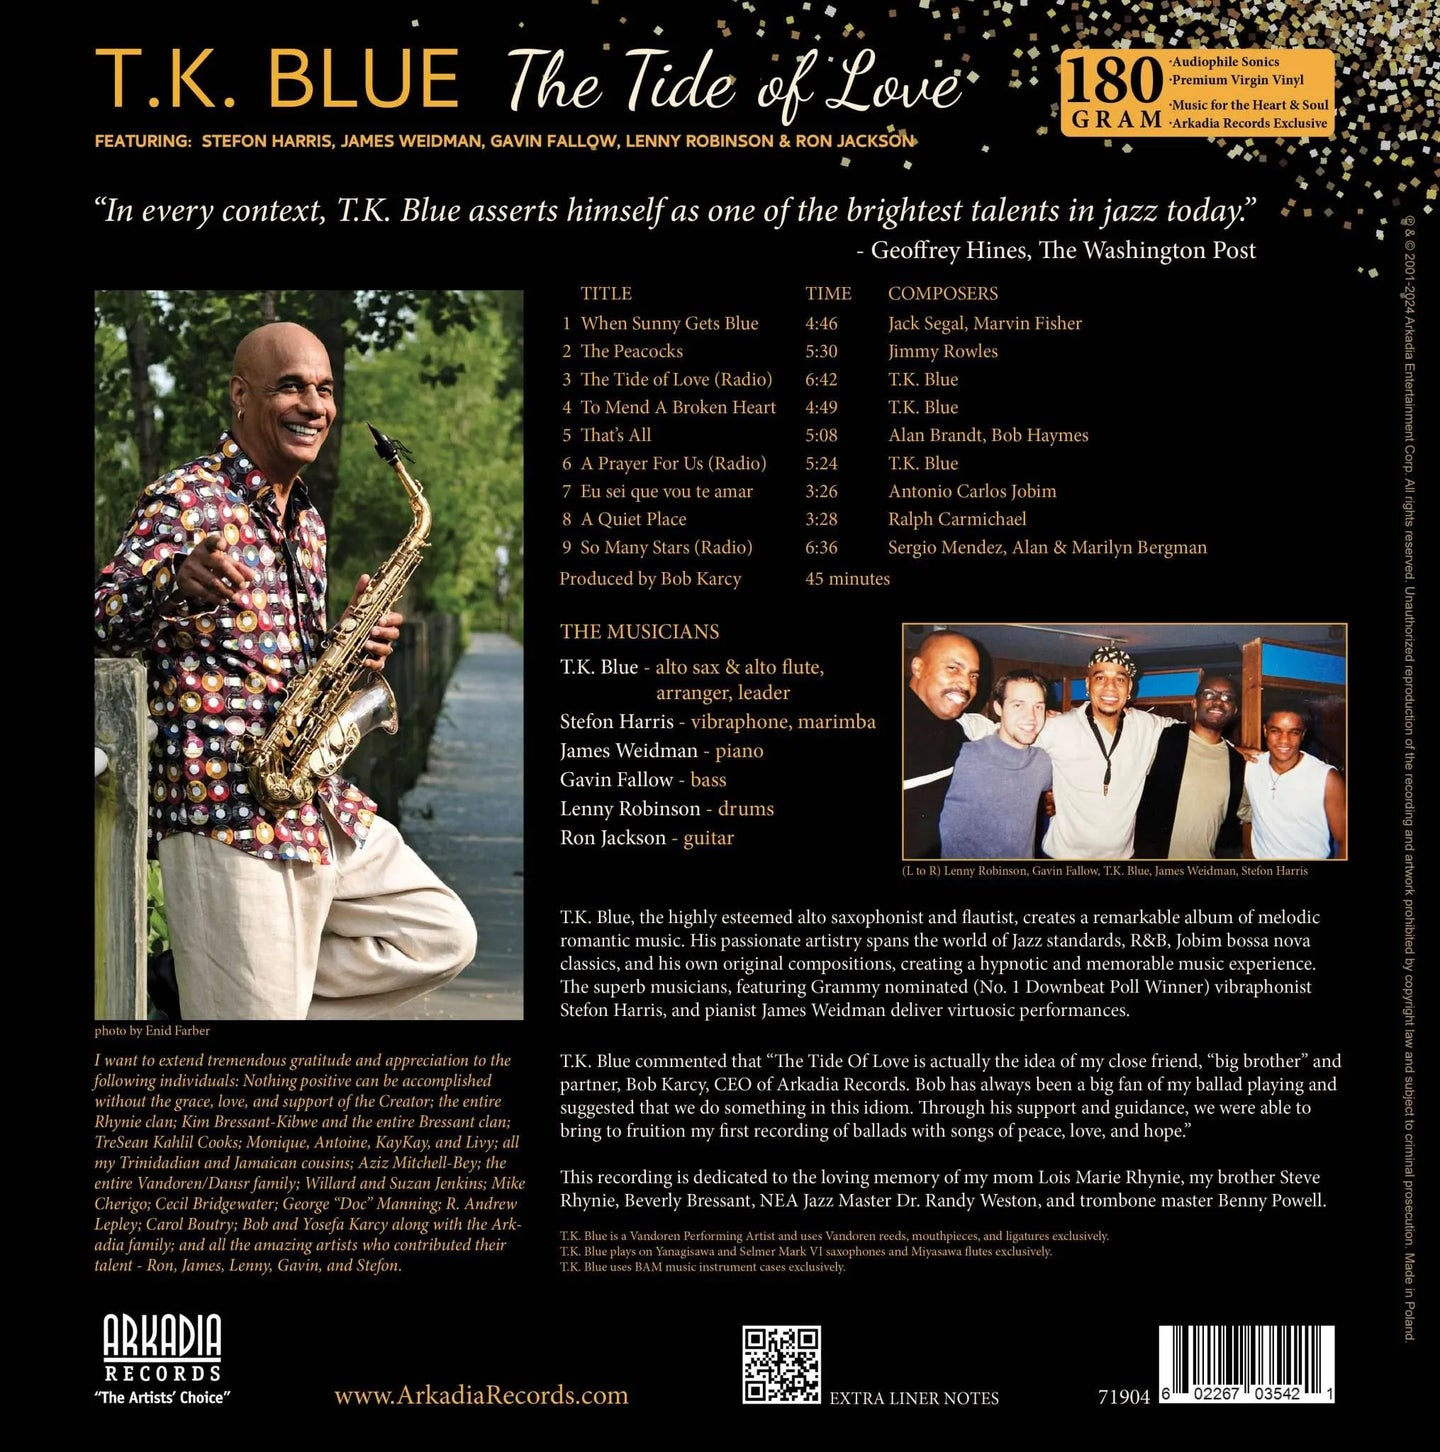 T.K. BLUE - The Tide of Love